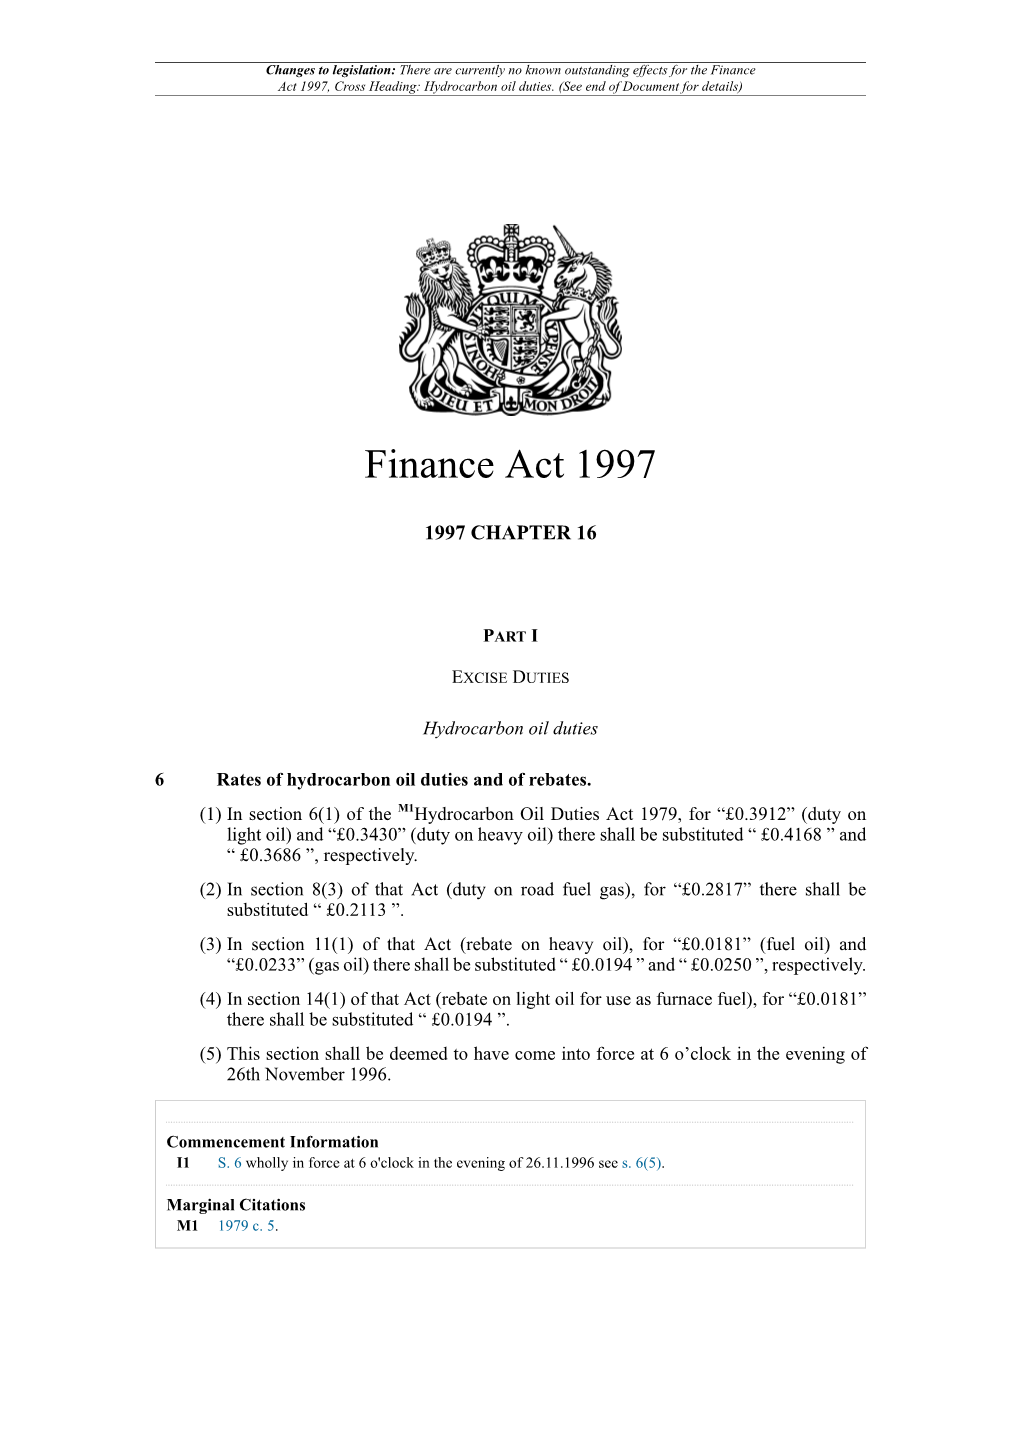 Finance Act 1997, Cross Heading: Hydrocarbon Oil Duties